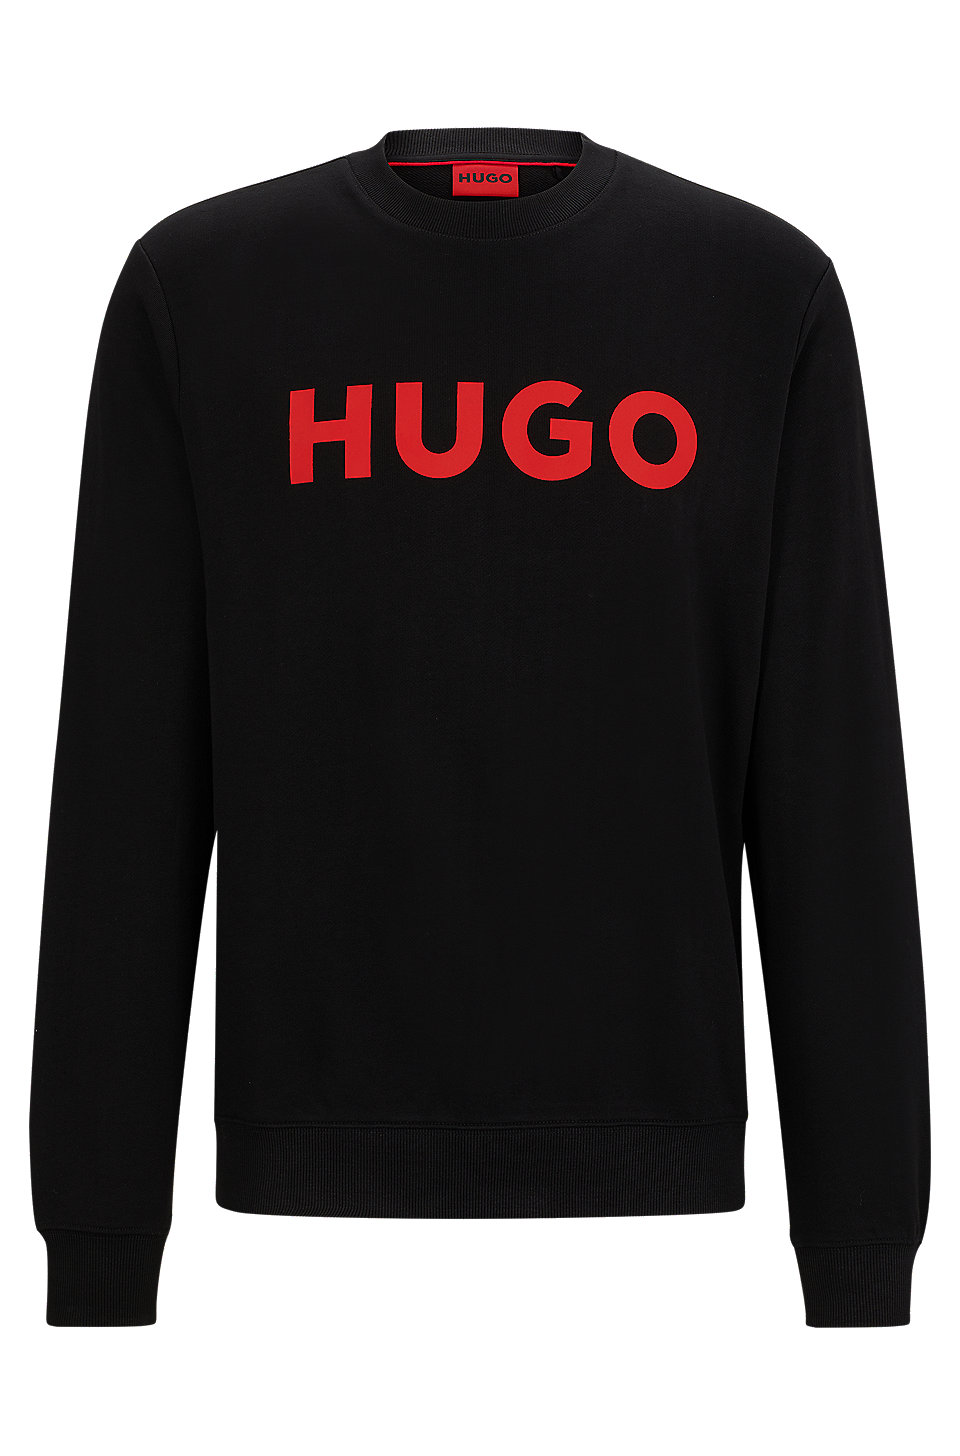 HUGO - Crew-neck sweatshirt in French terry with contrast logo